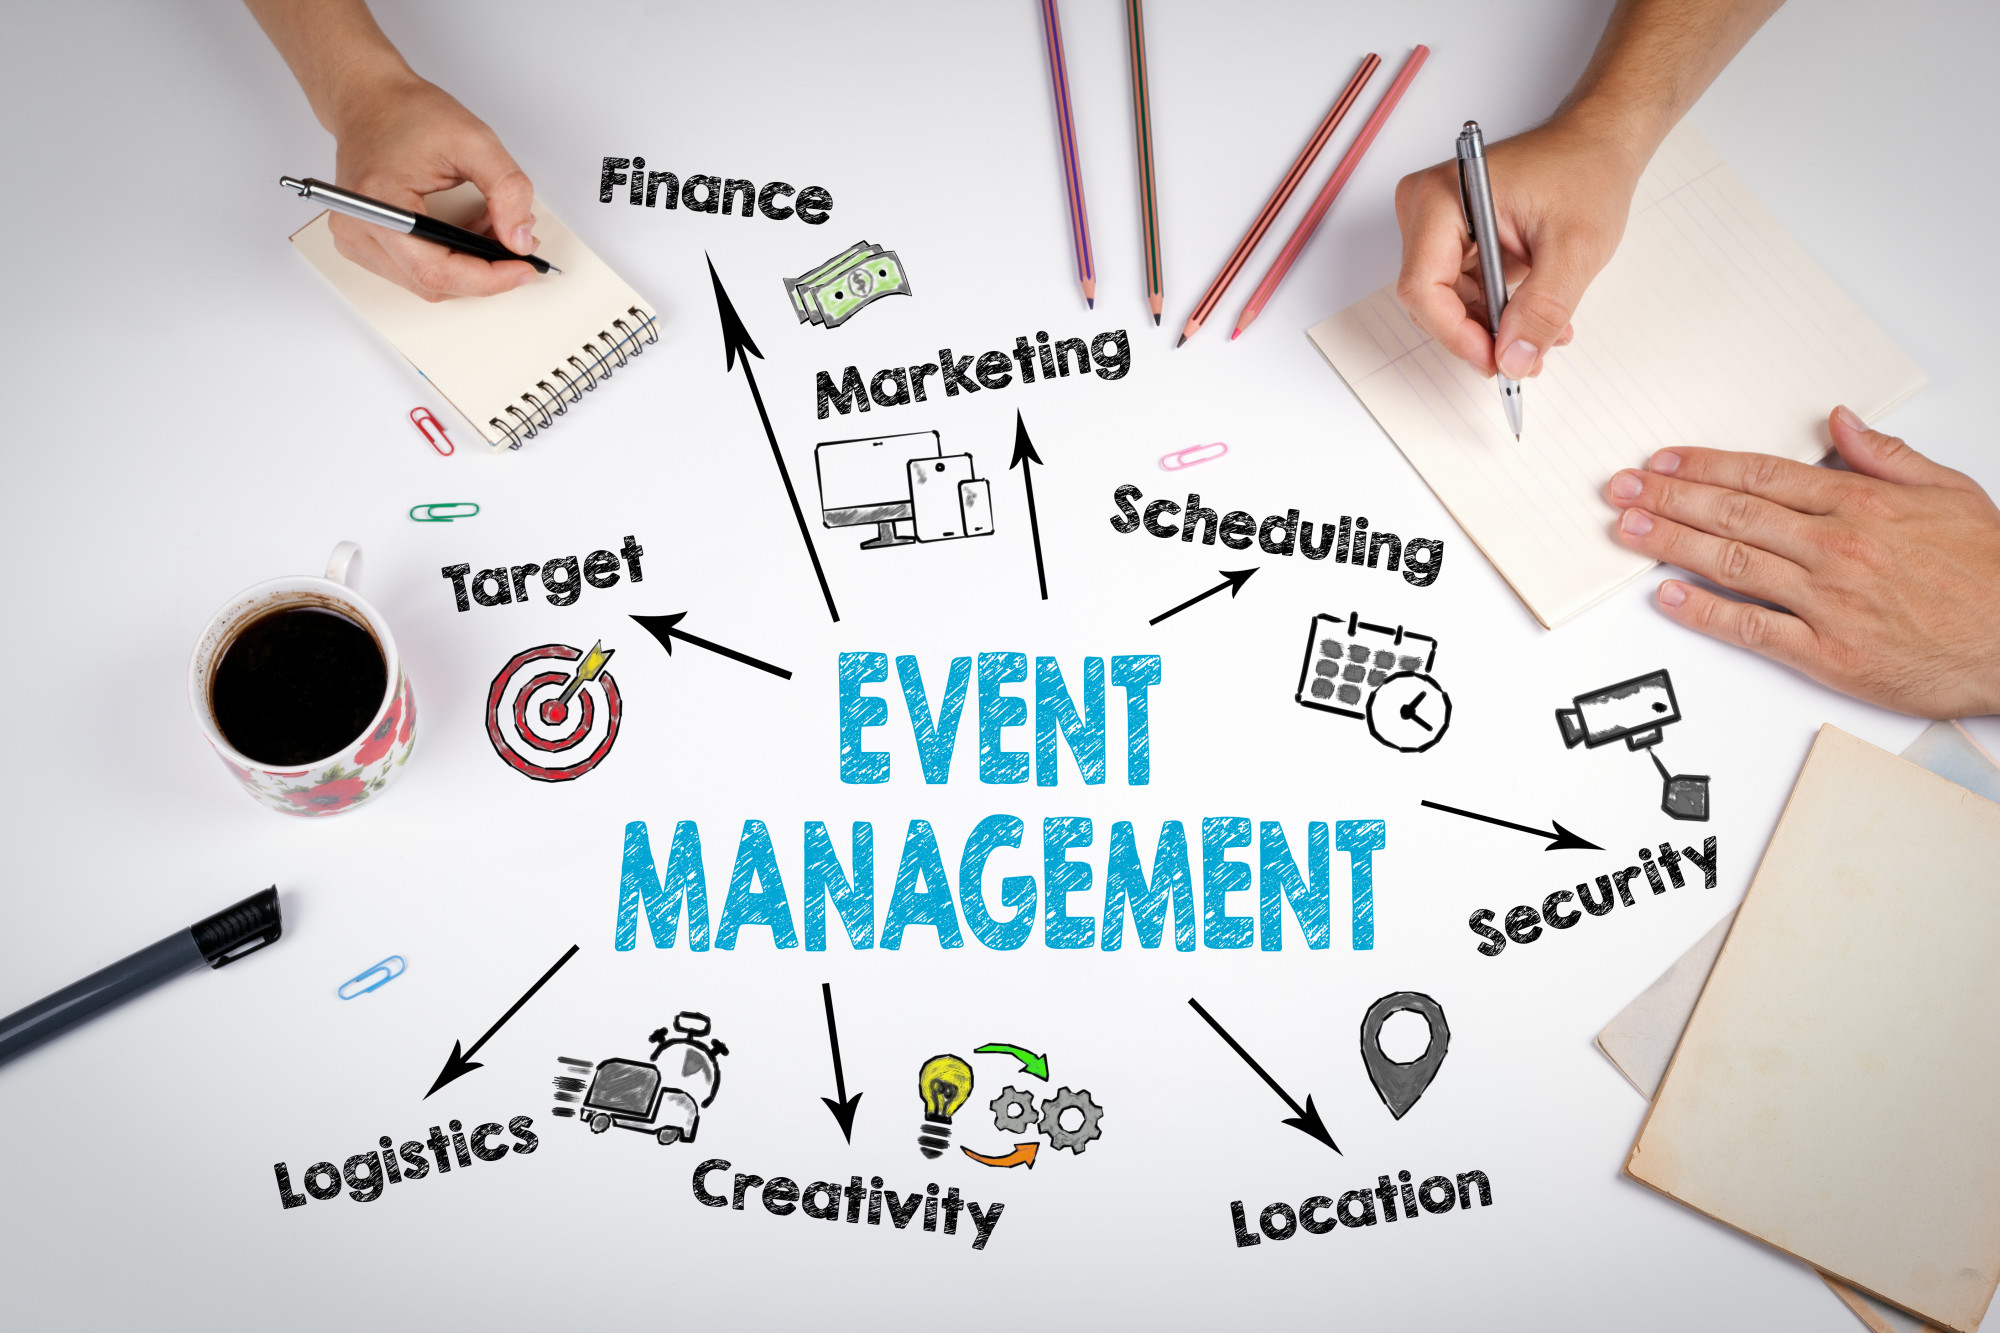 Event Risk Management Checklist